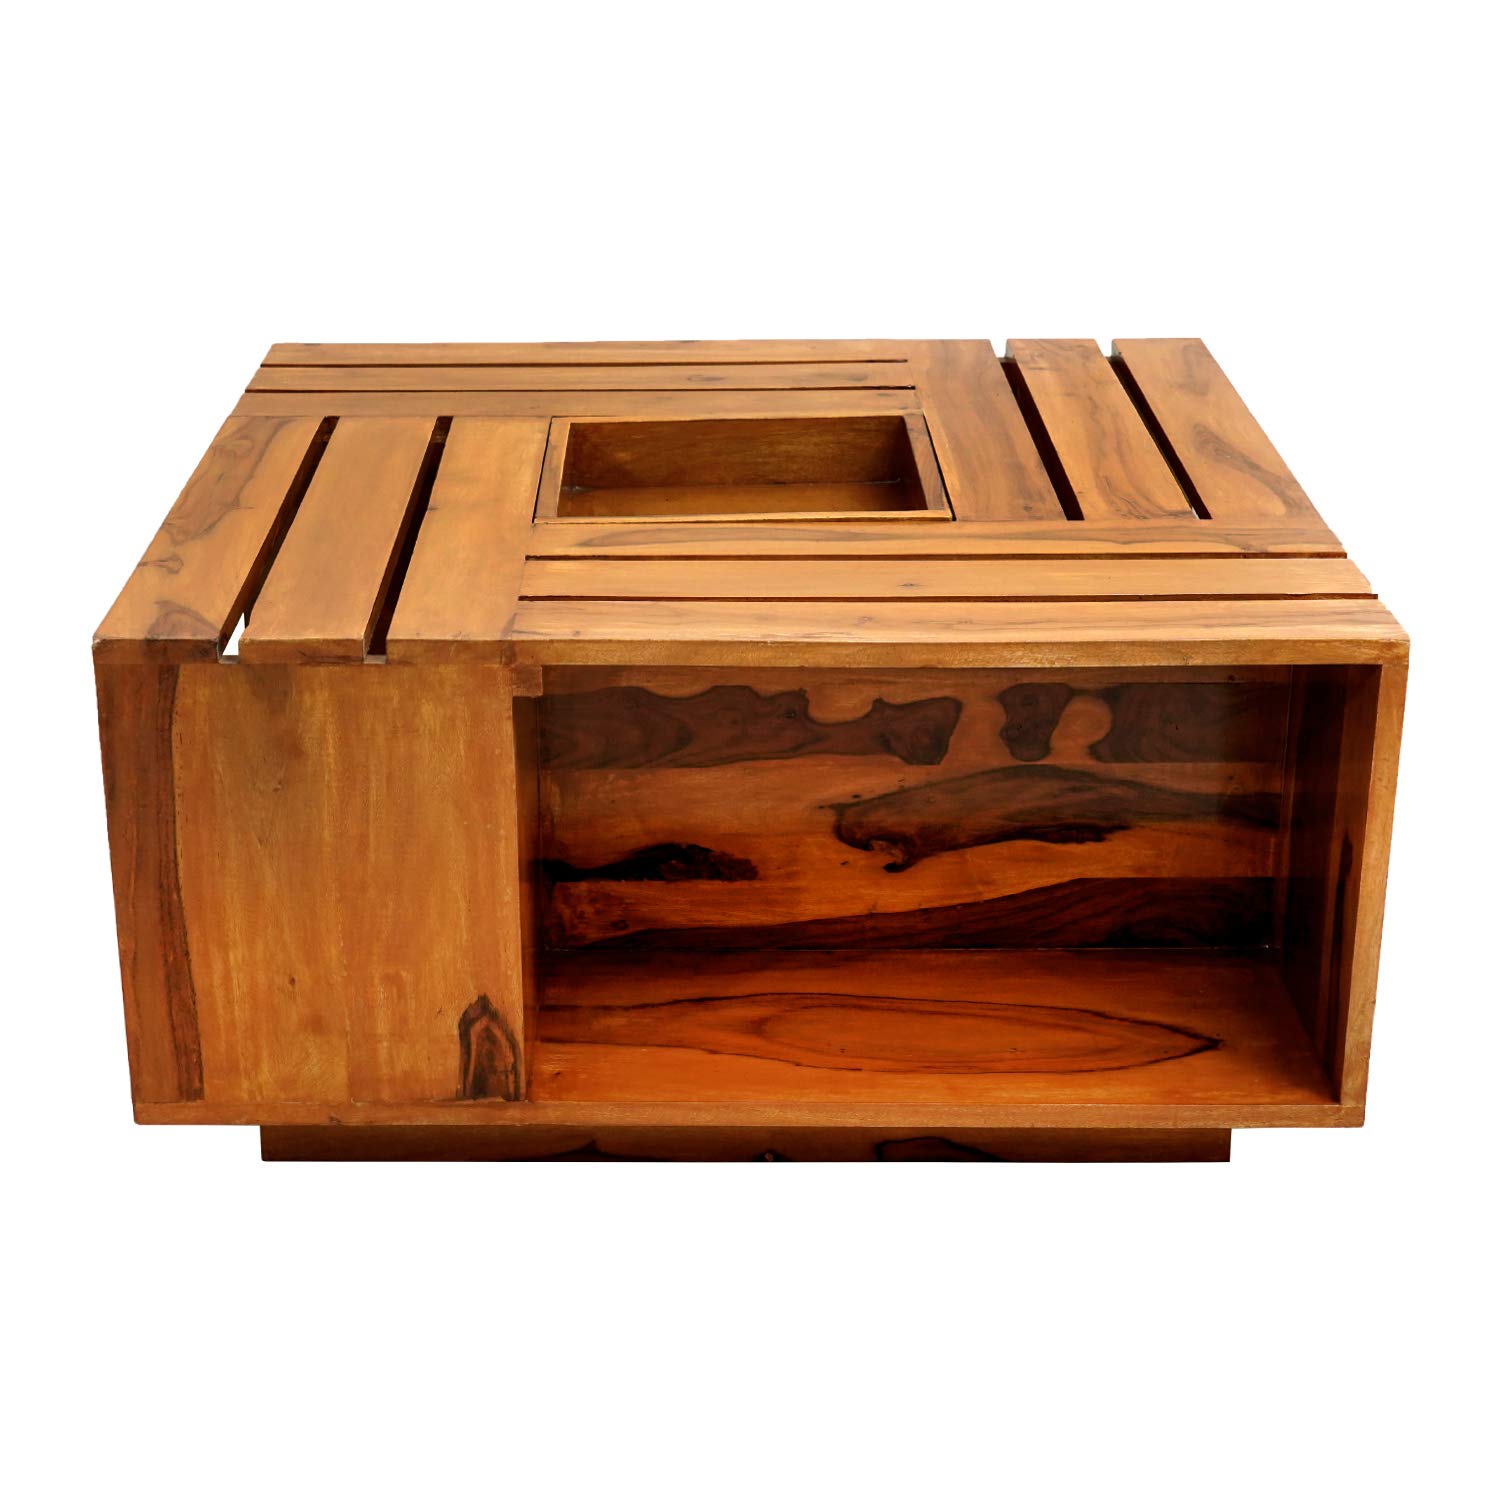 Amaltas® Wooden Coffee Table made of Sheesham Wood